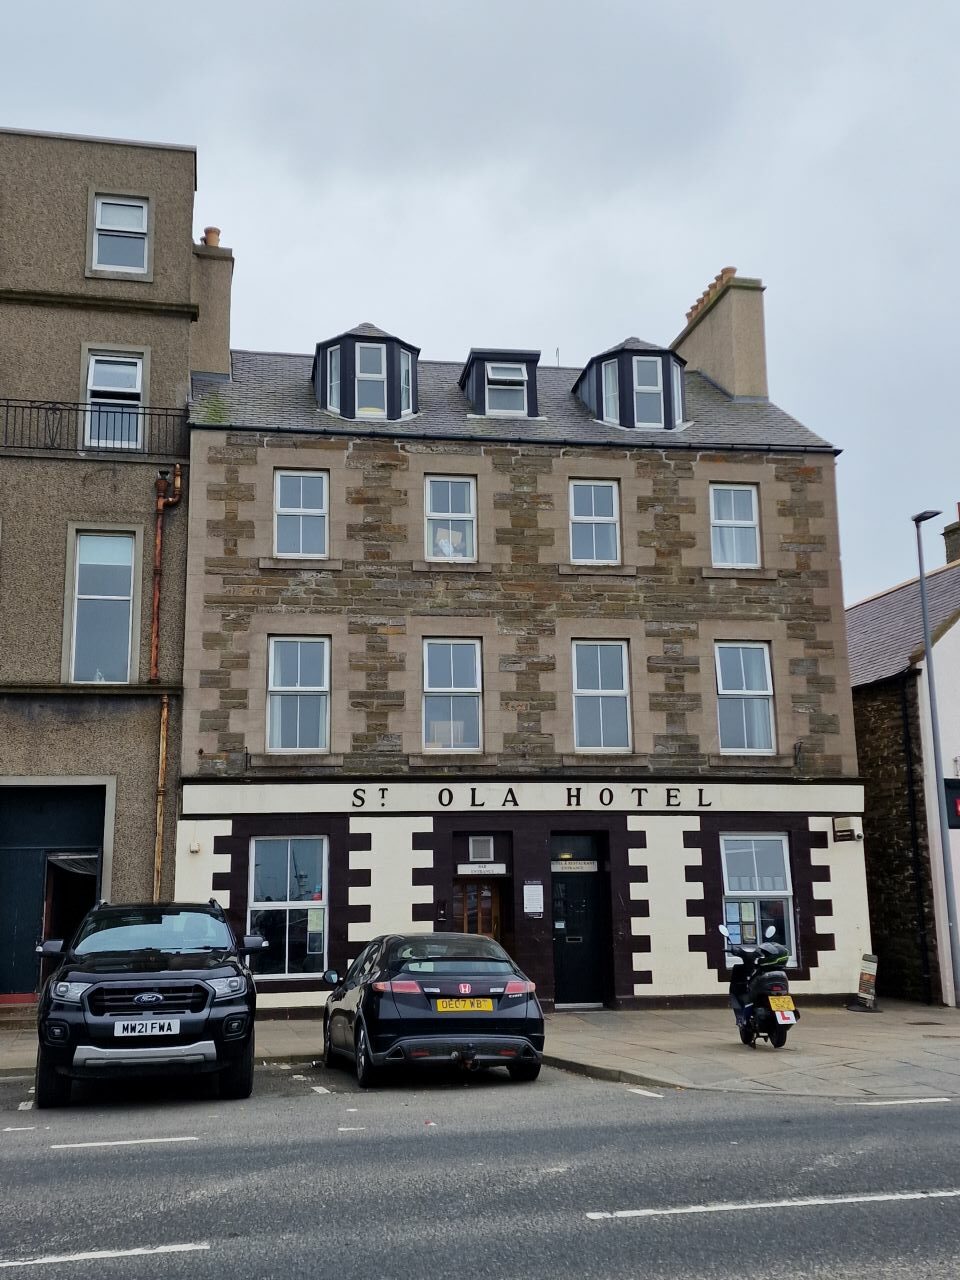 St Ola Hotel in Orkney